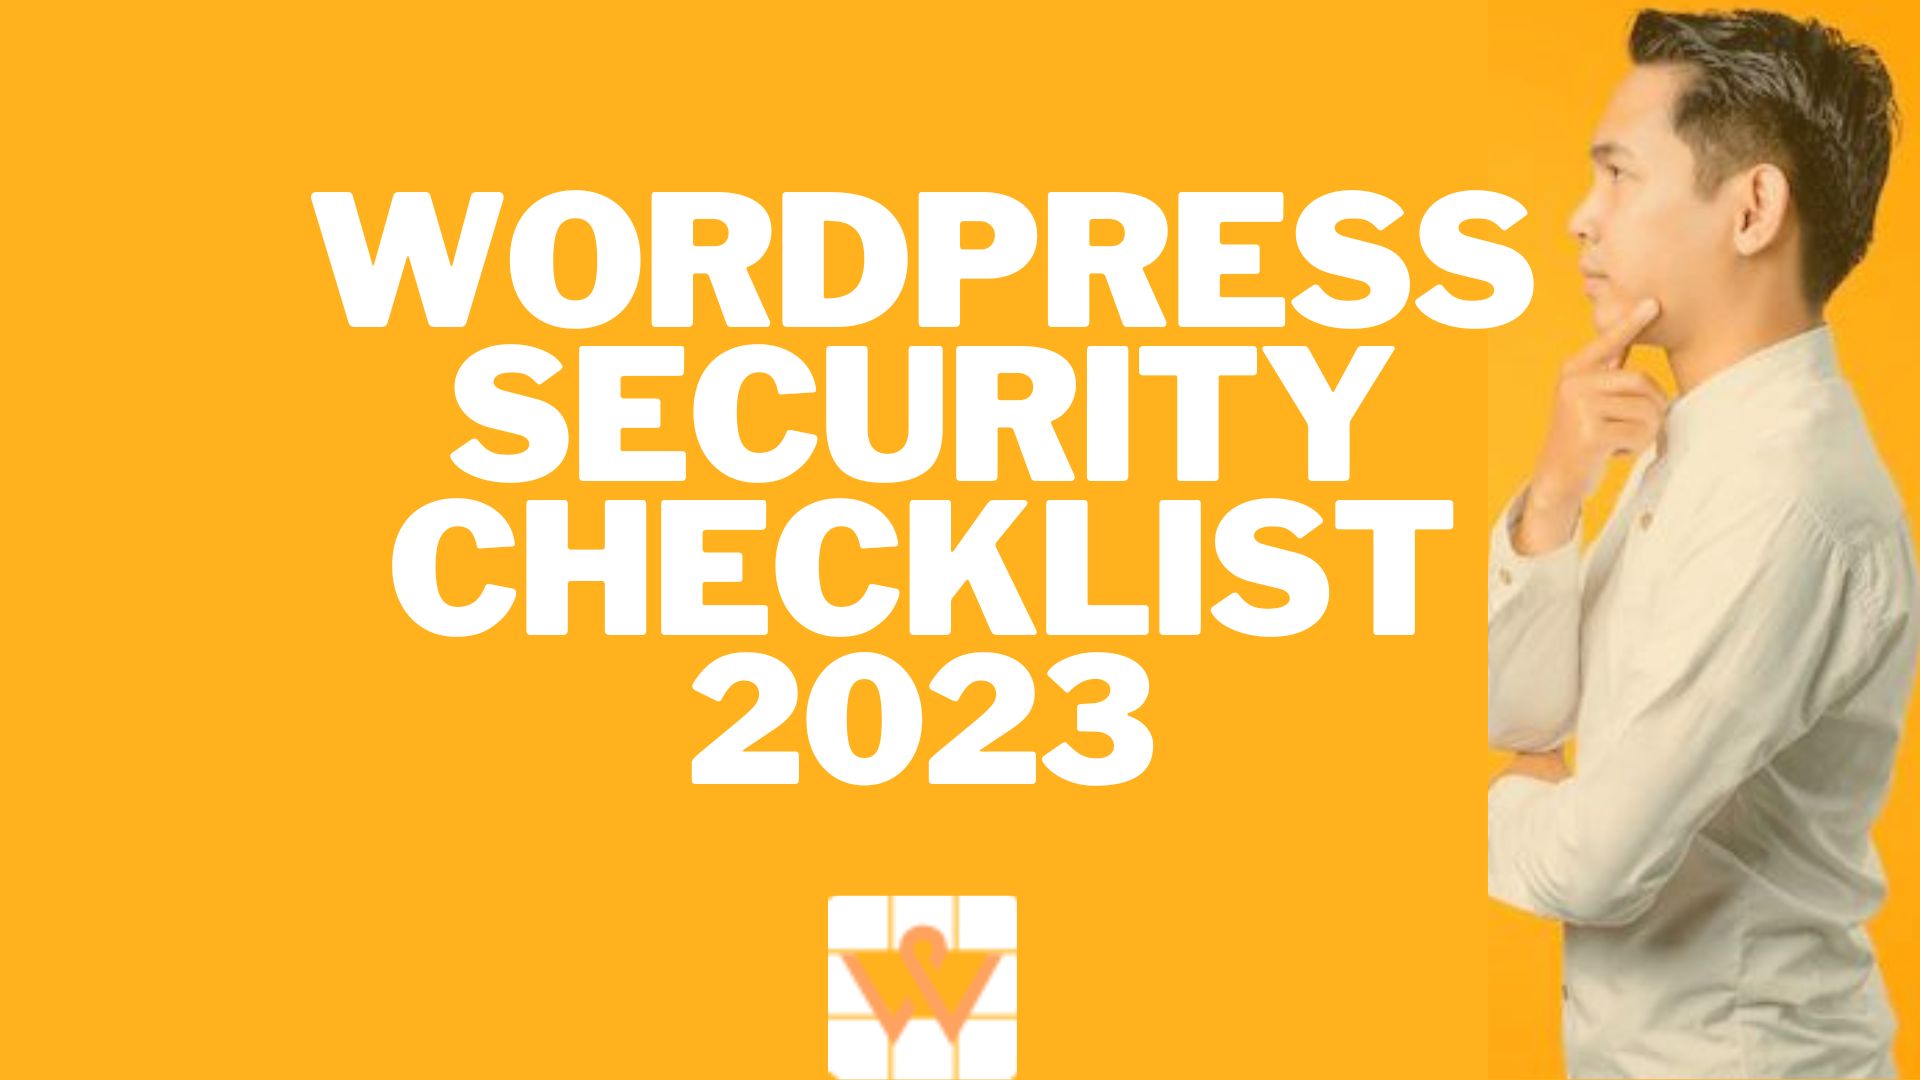 WordPress Security Checklist Guide 2023 – [UPDATED]